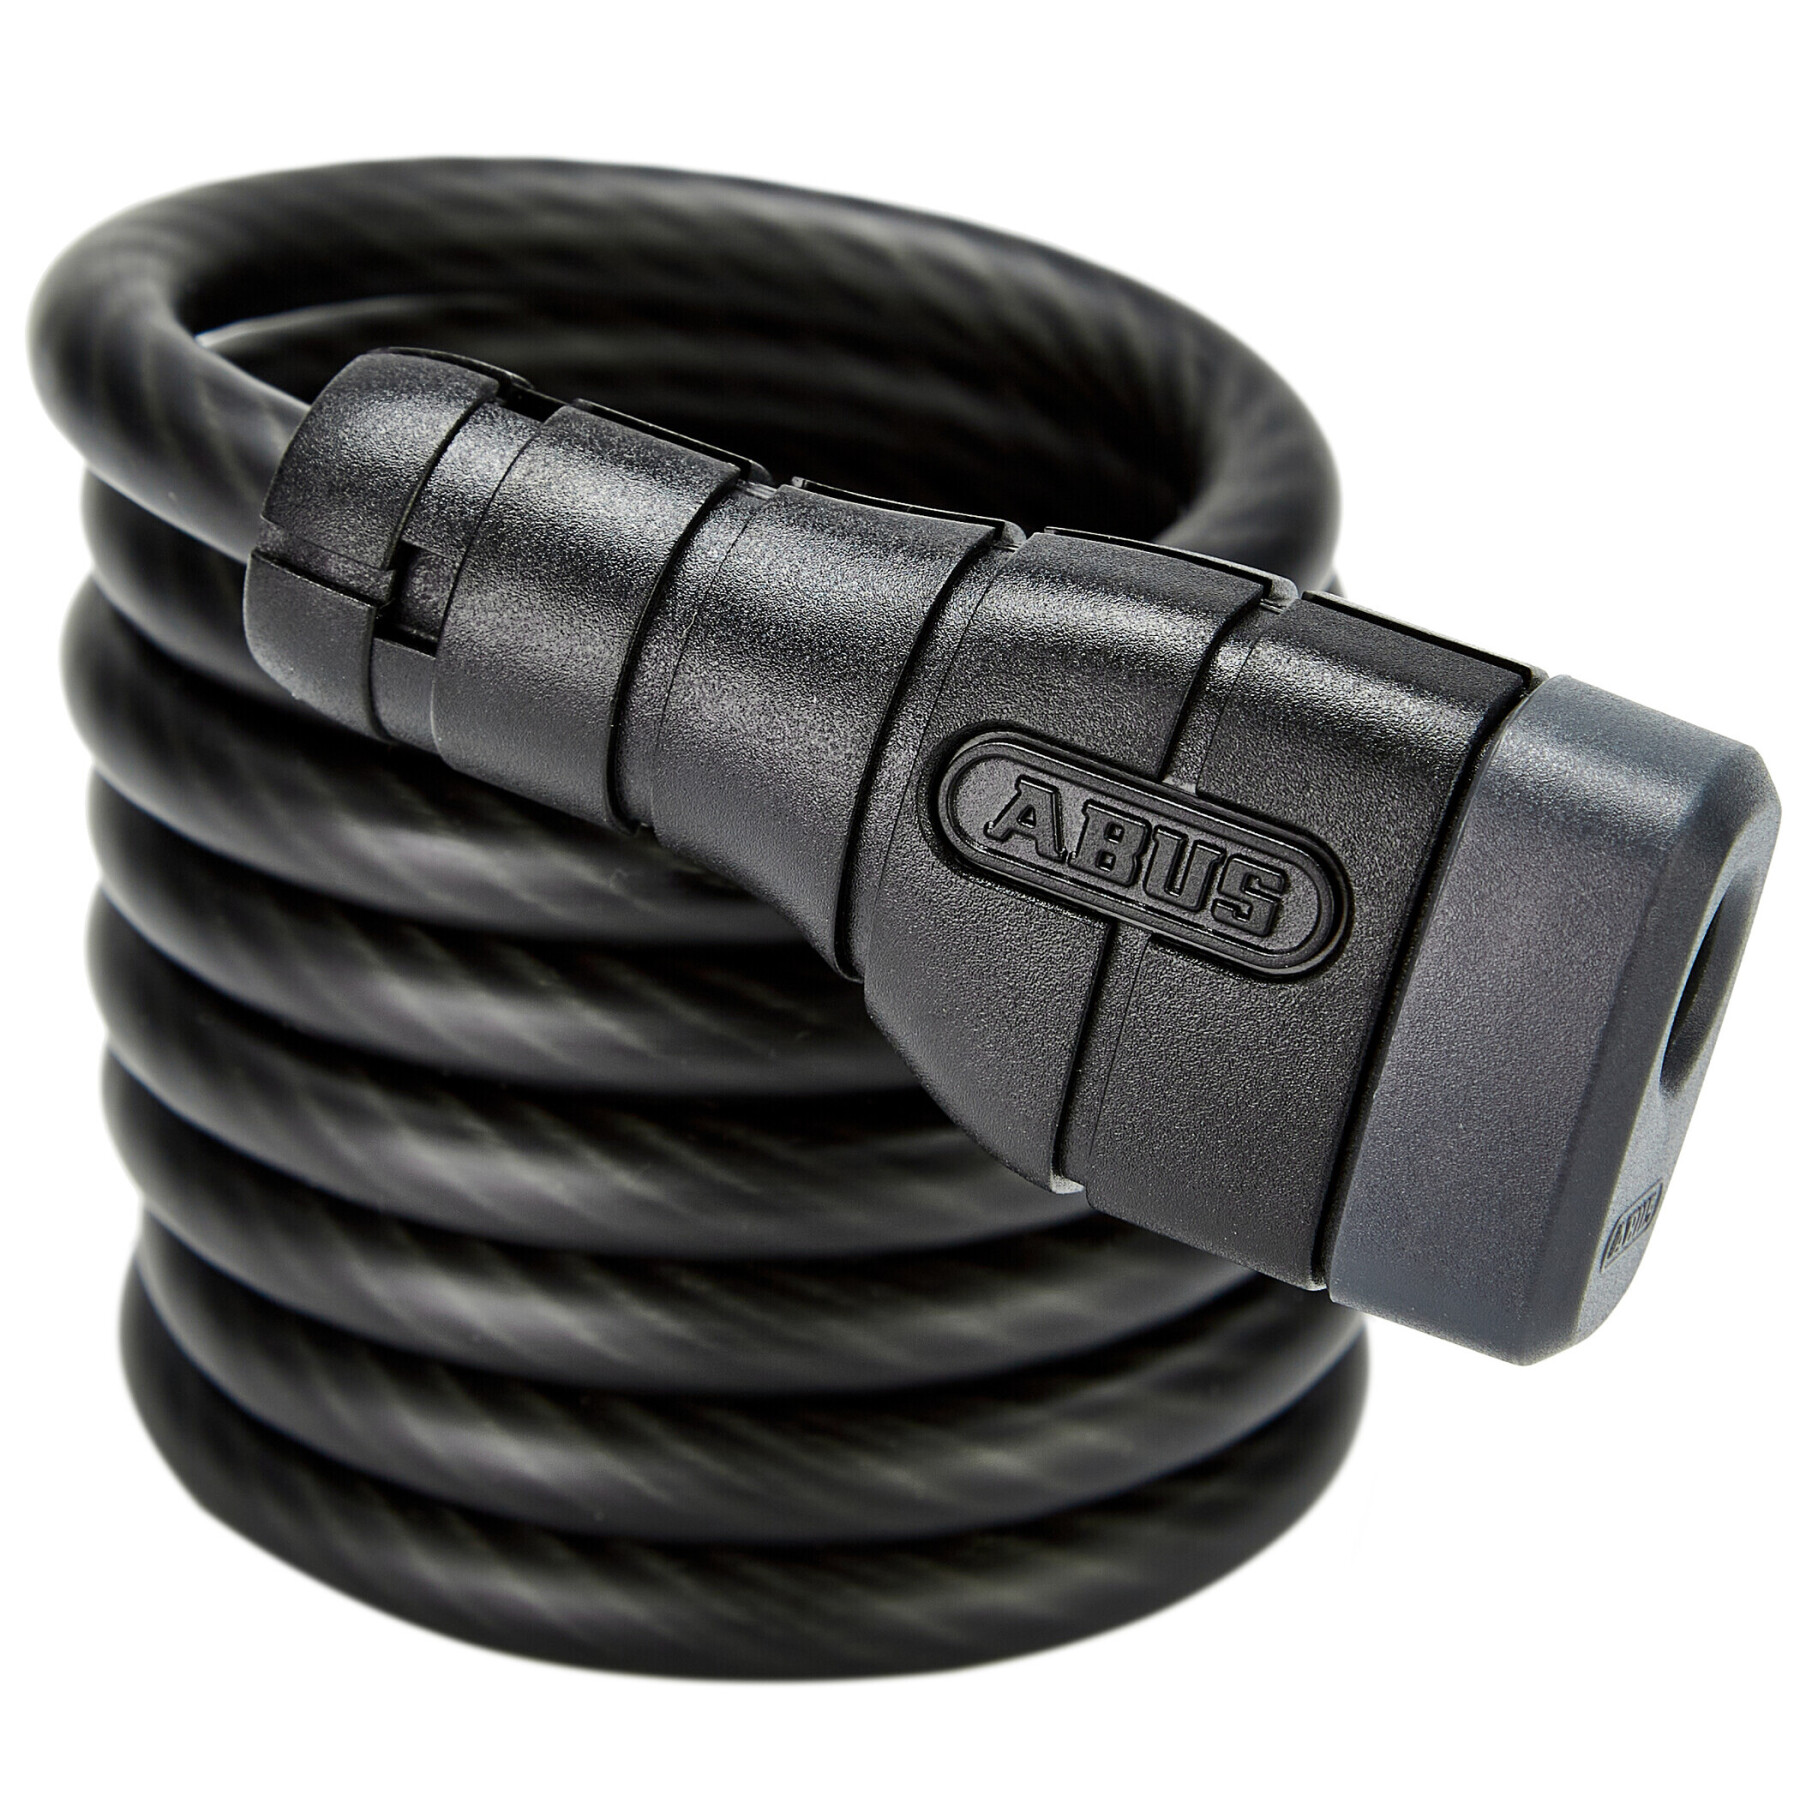 Antivol câble Abus Booster 6512K/180